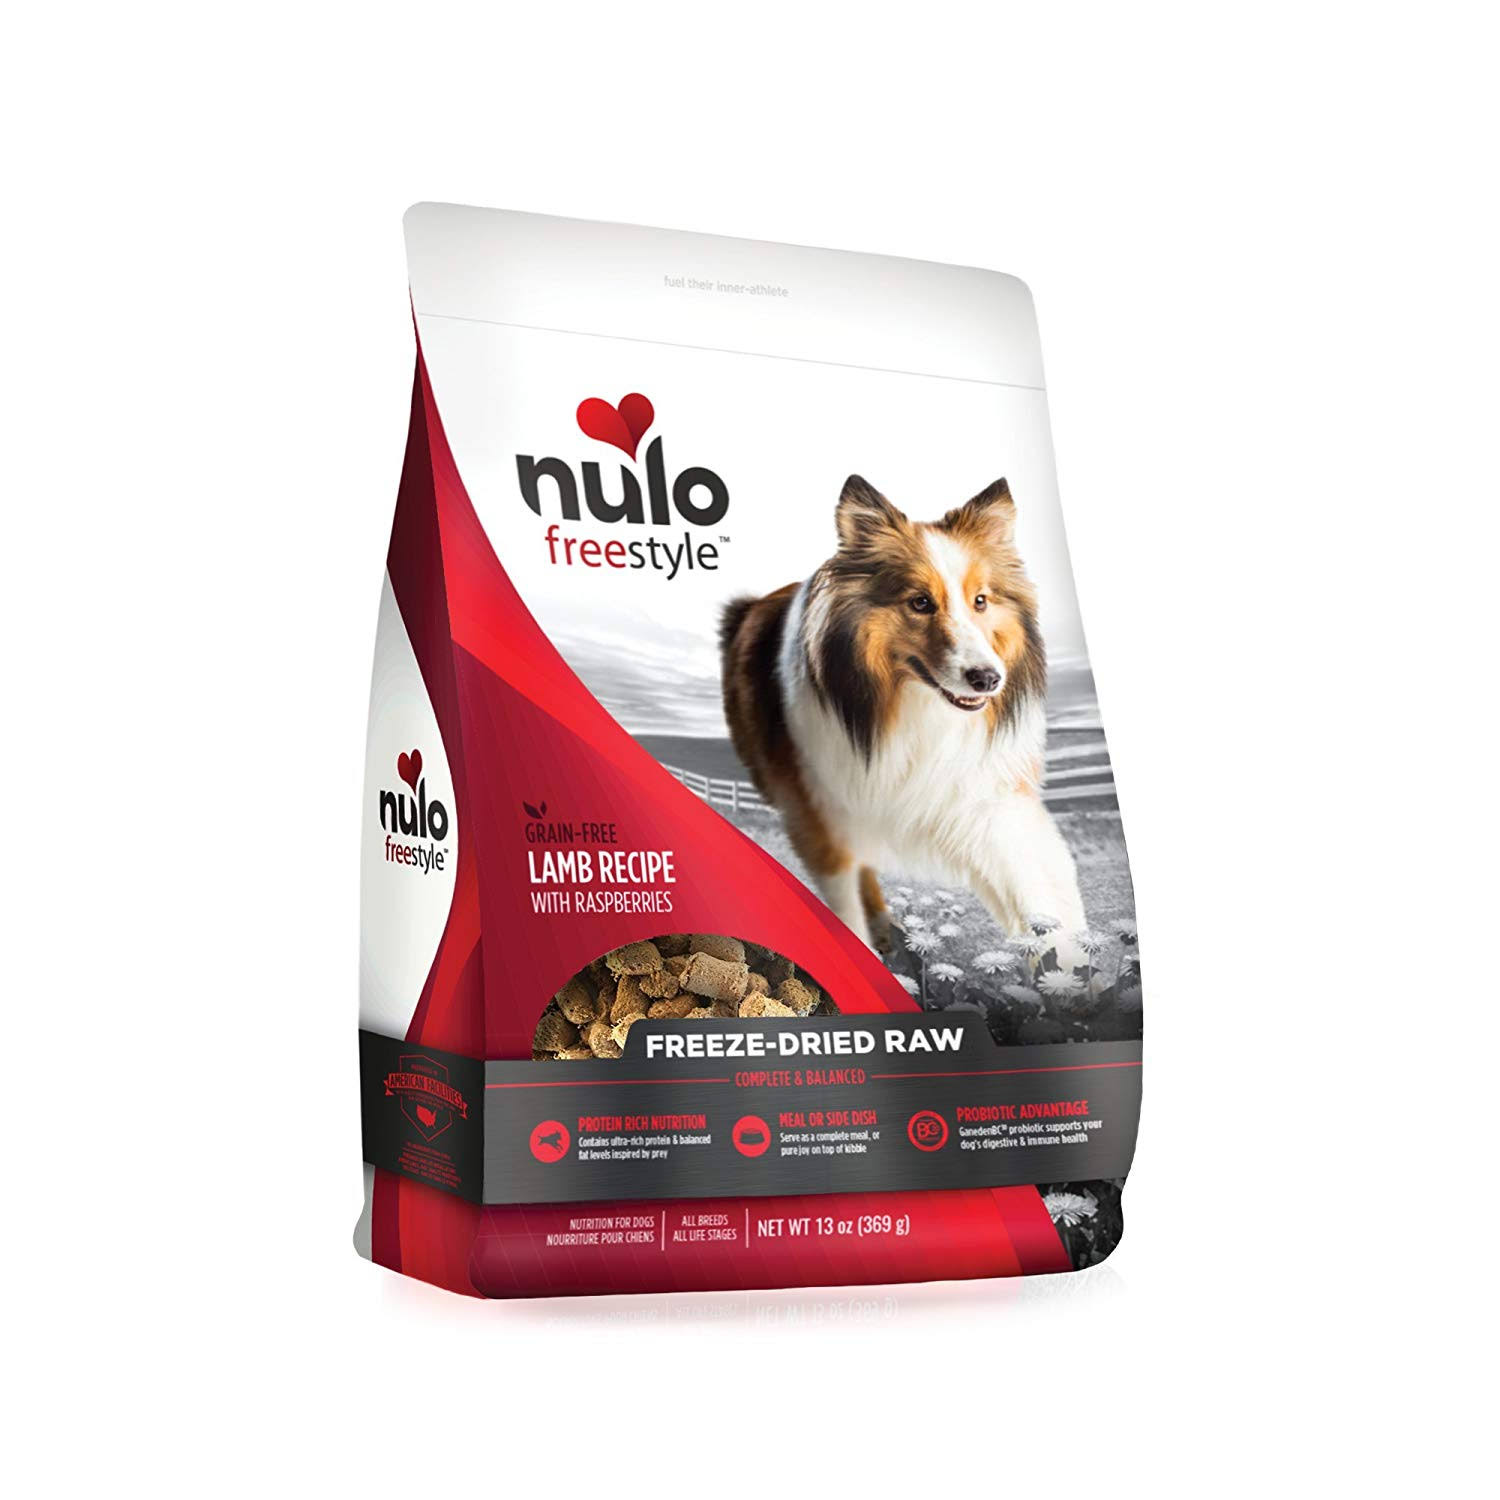 Nulo Freeze Dried Raw Grain Free Dog Food - Lamb Recipe with Raspberries, 13oz